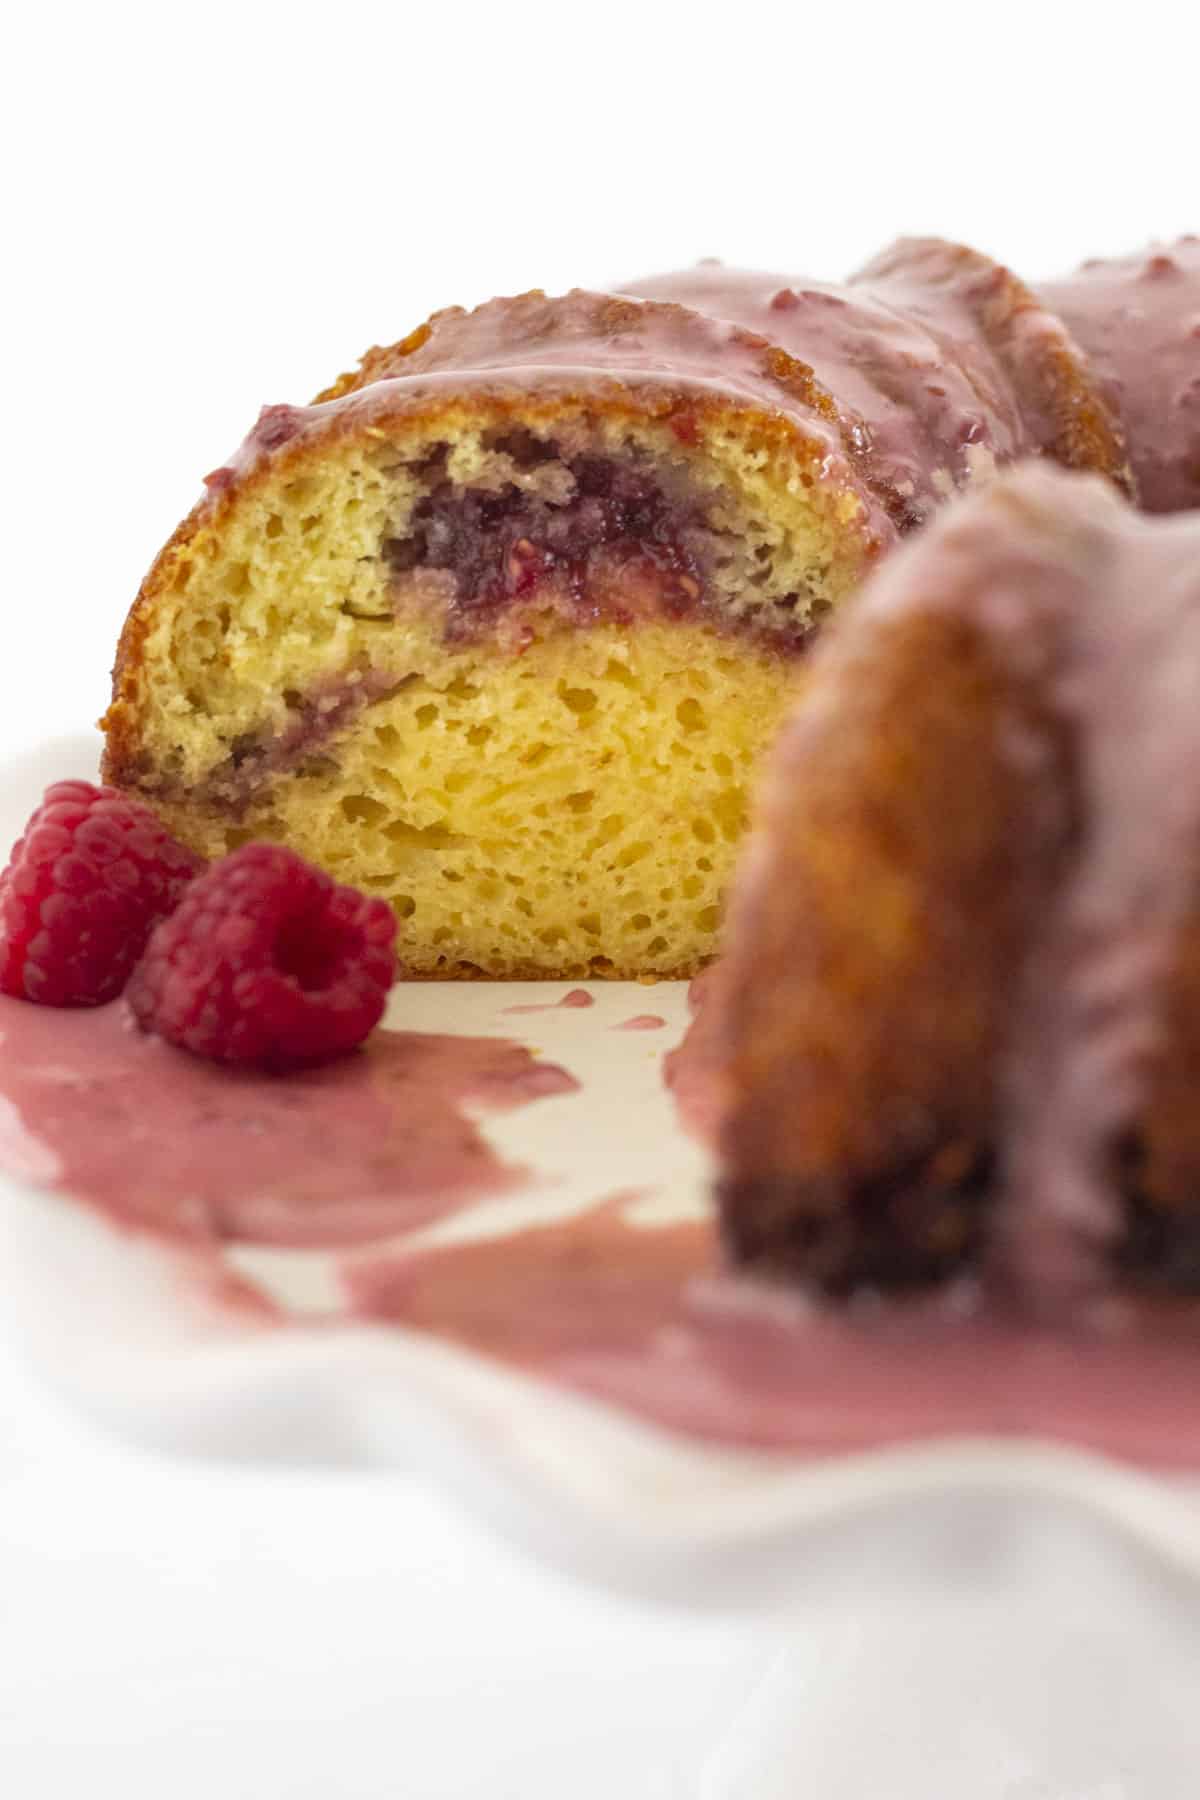 The inside of a raspberry lemonade cake with raspberry filling.